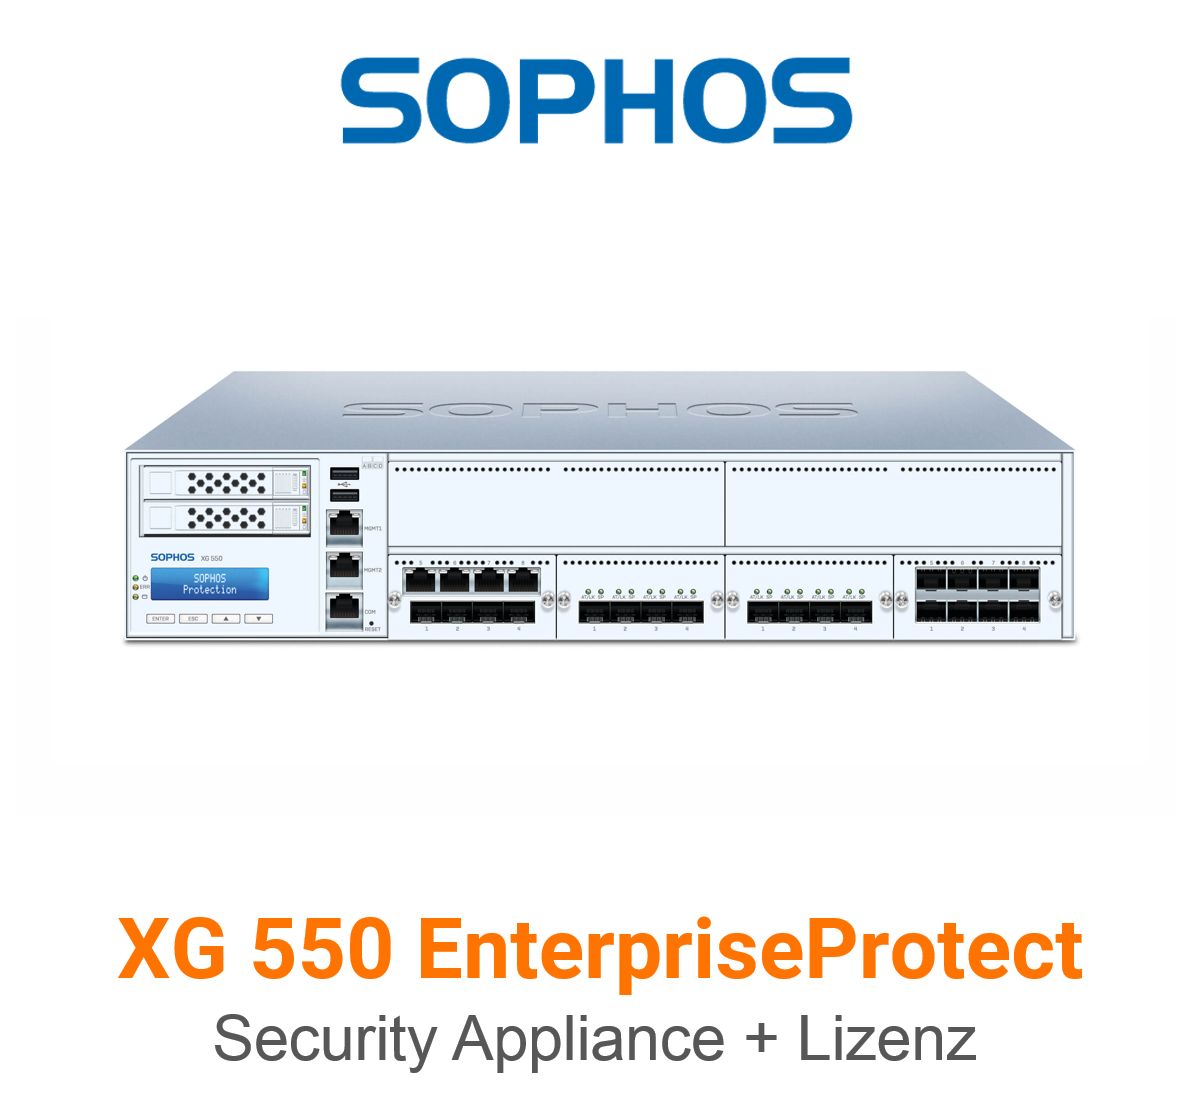 Sophos XG 550 EnterpriseProtect Bundle (Hardware + Lizenz)